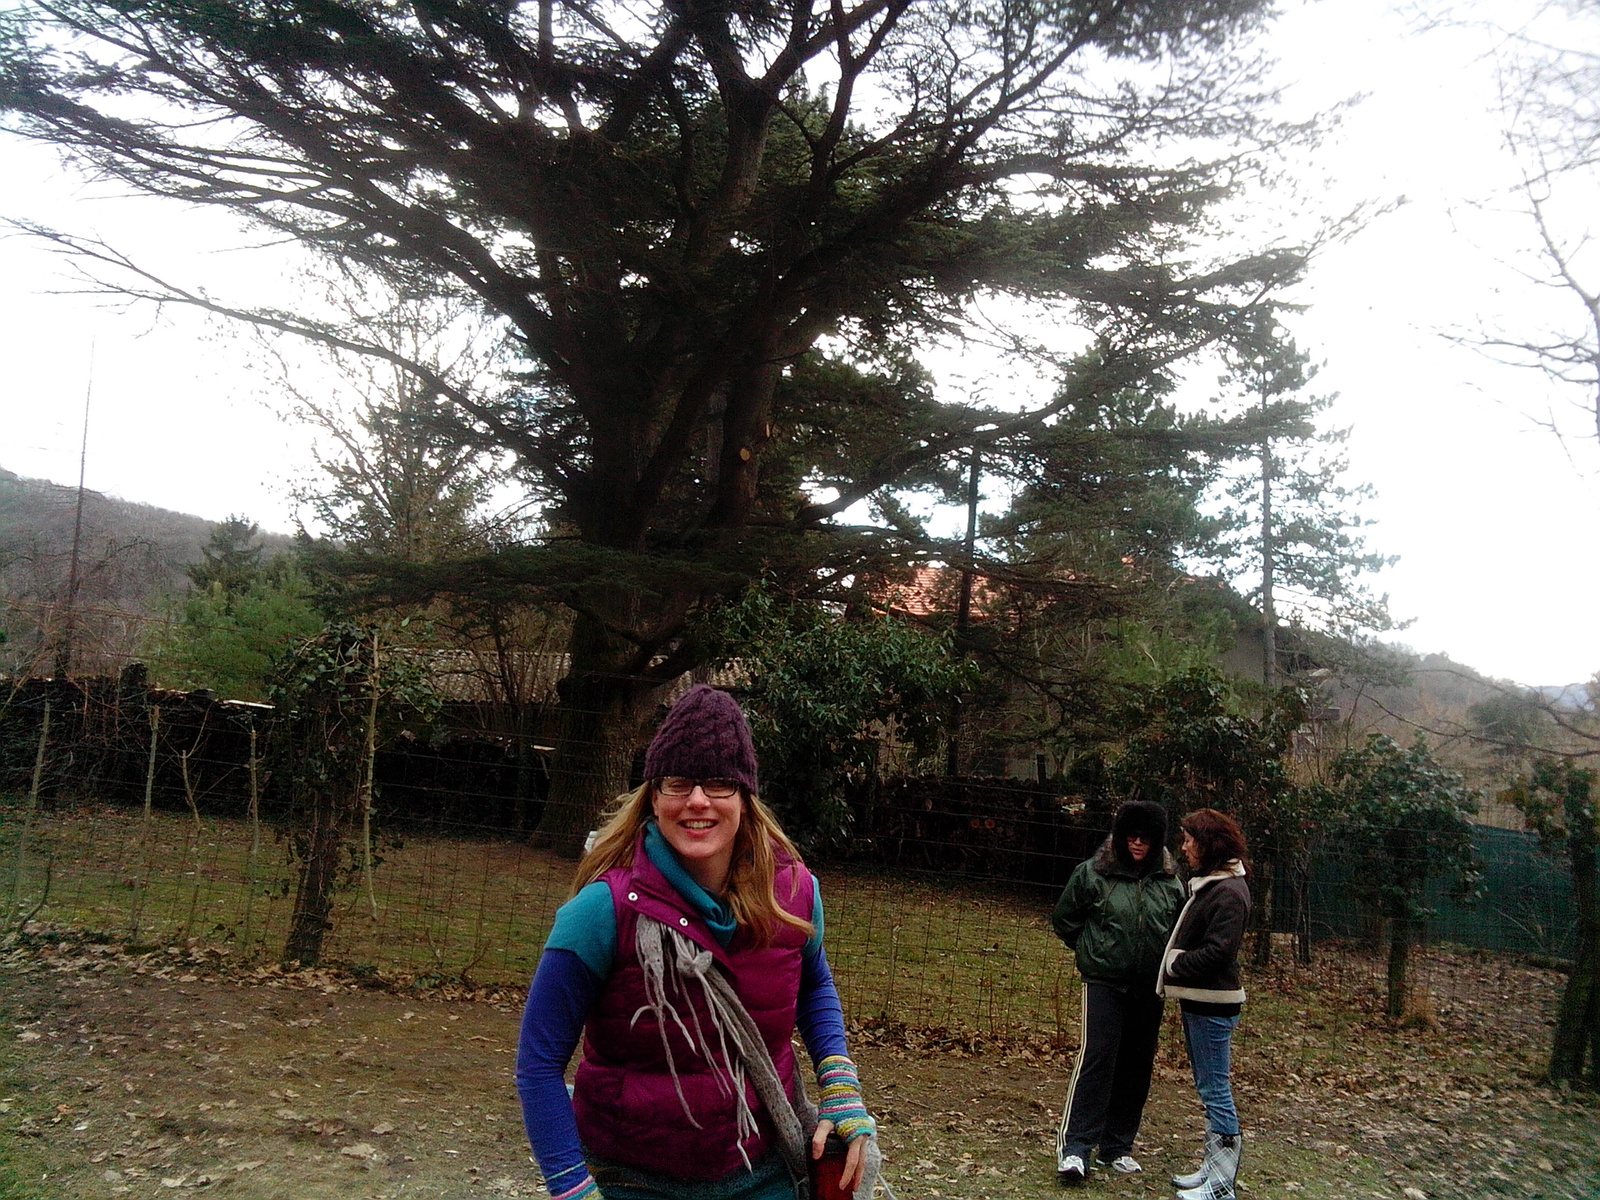 A kb. 120 éves cédrus fa + Judit